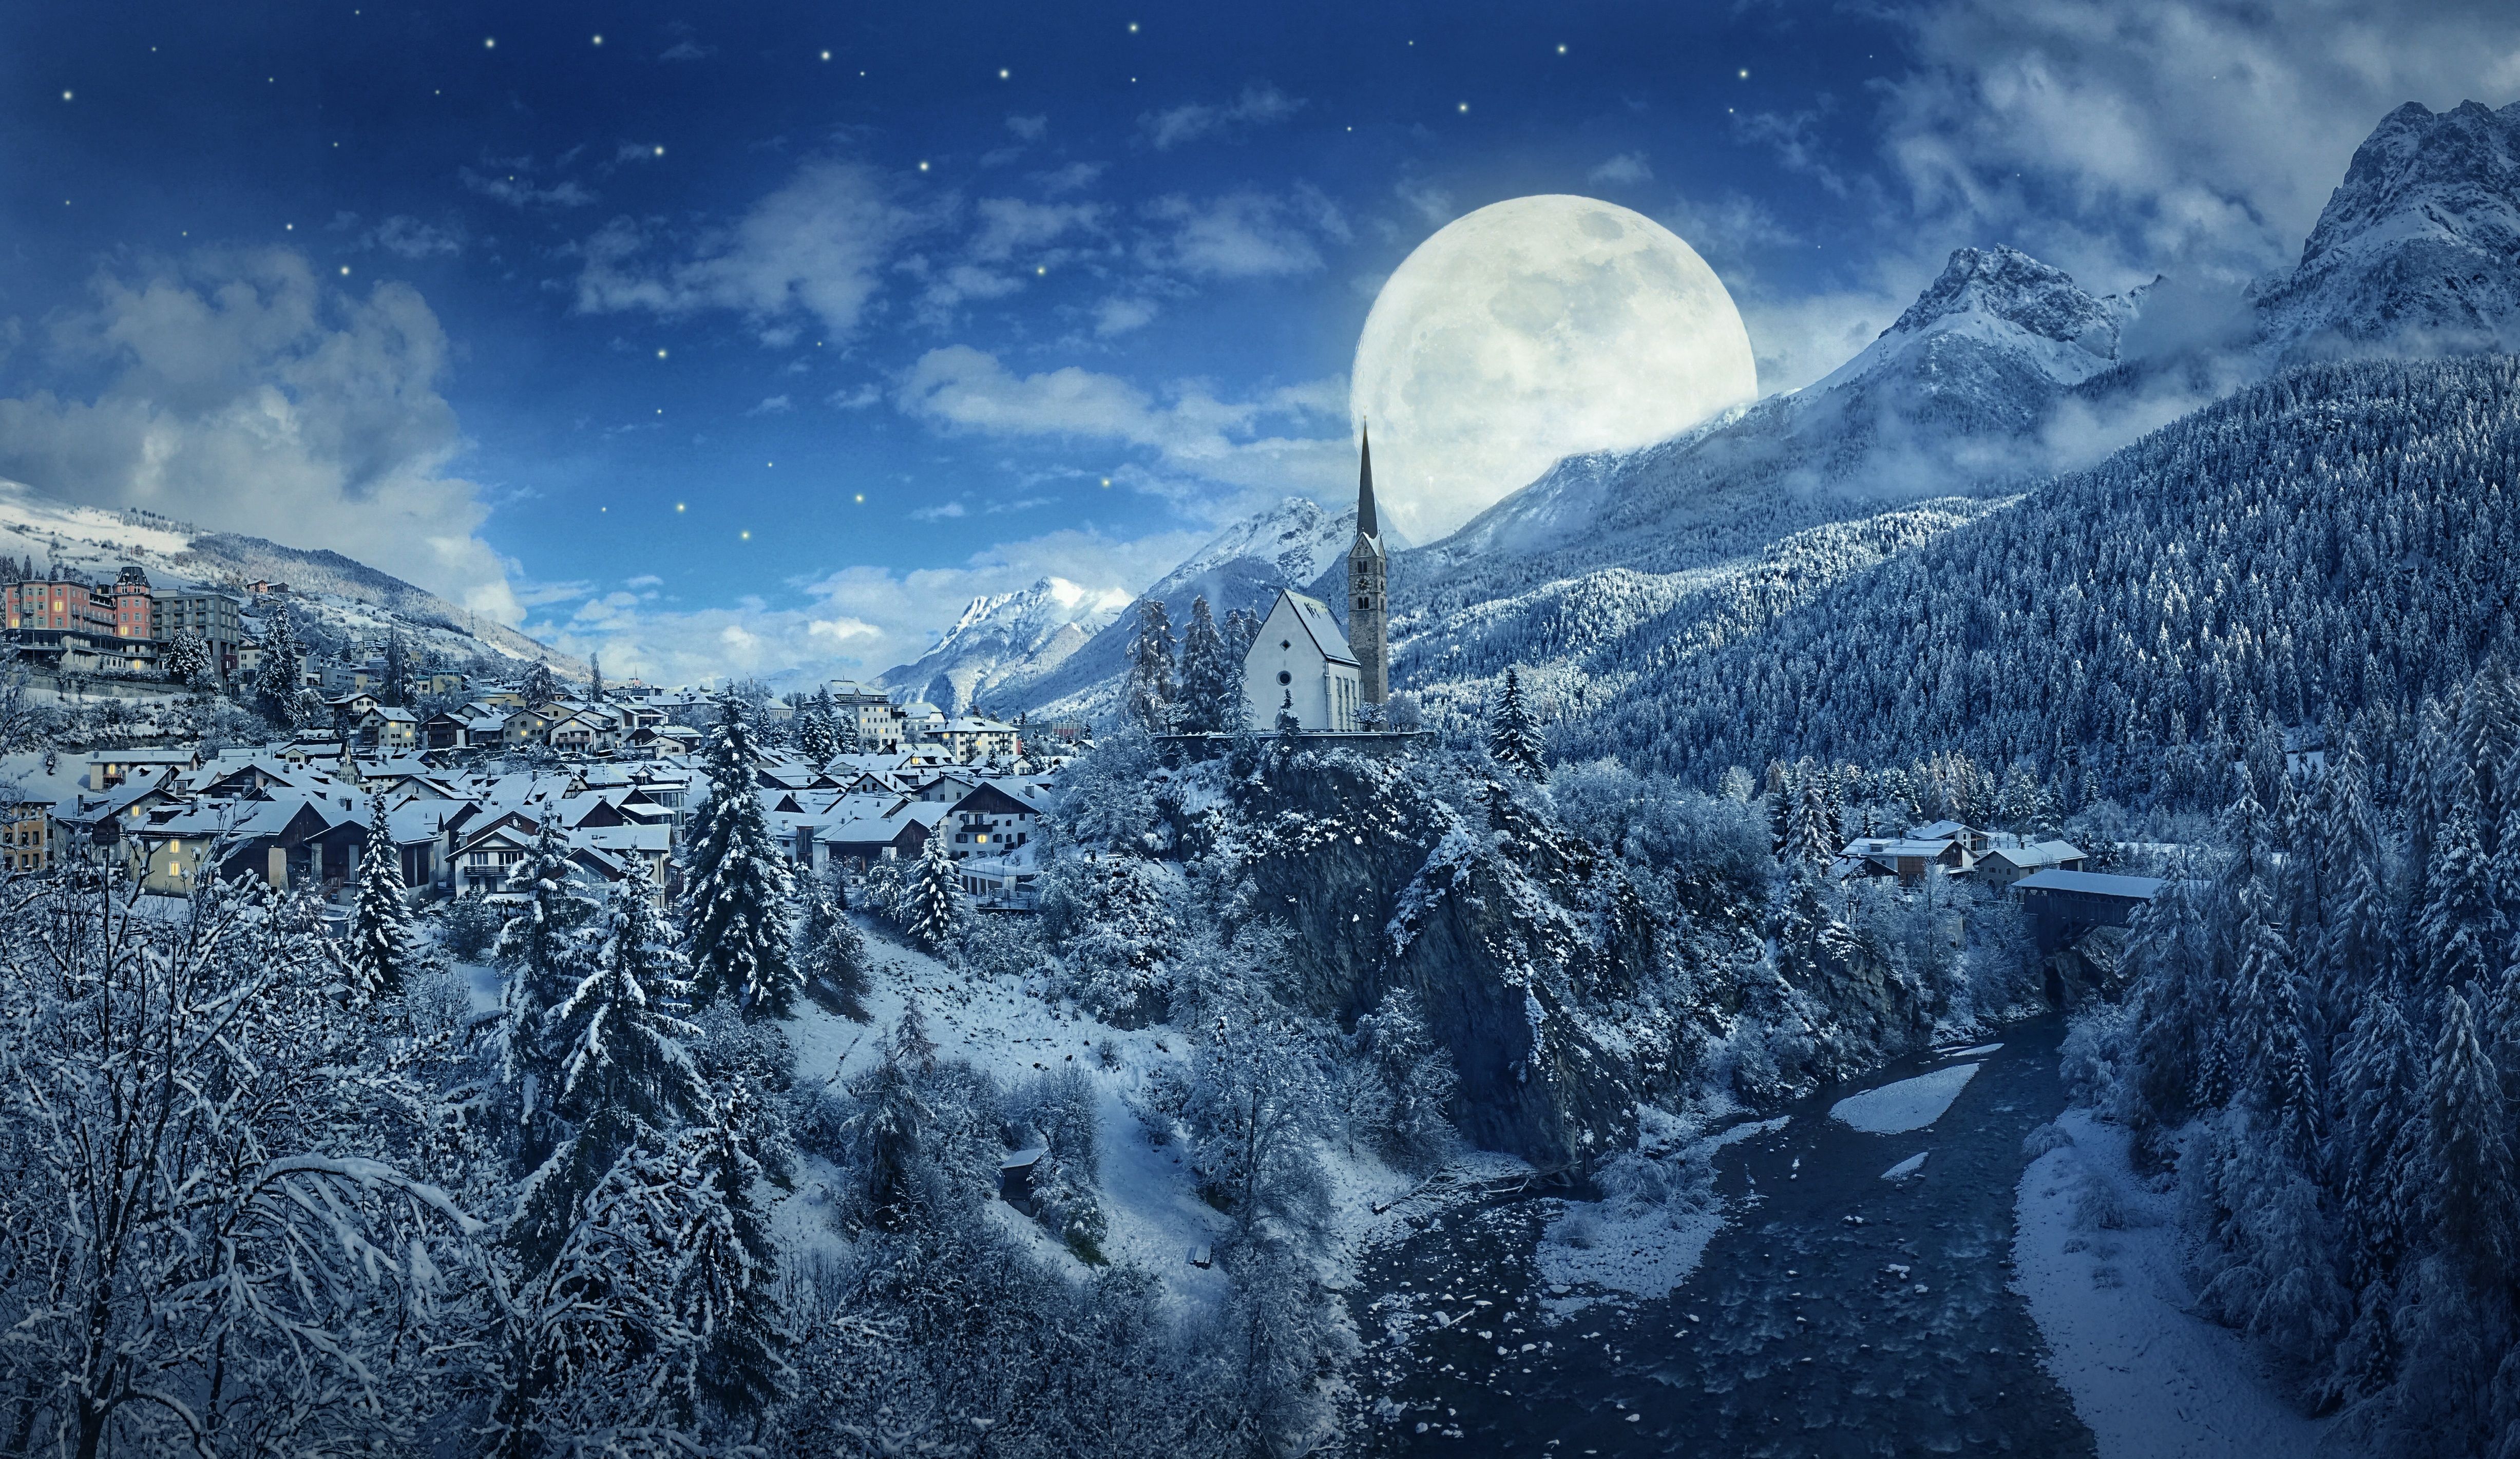 Winter 4K Wallpaper, Moon, Frozen, Forest, Village, Snowfall, 5K, Nature